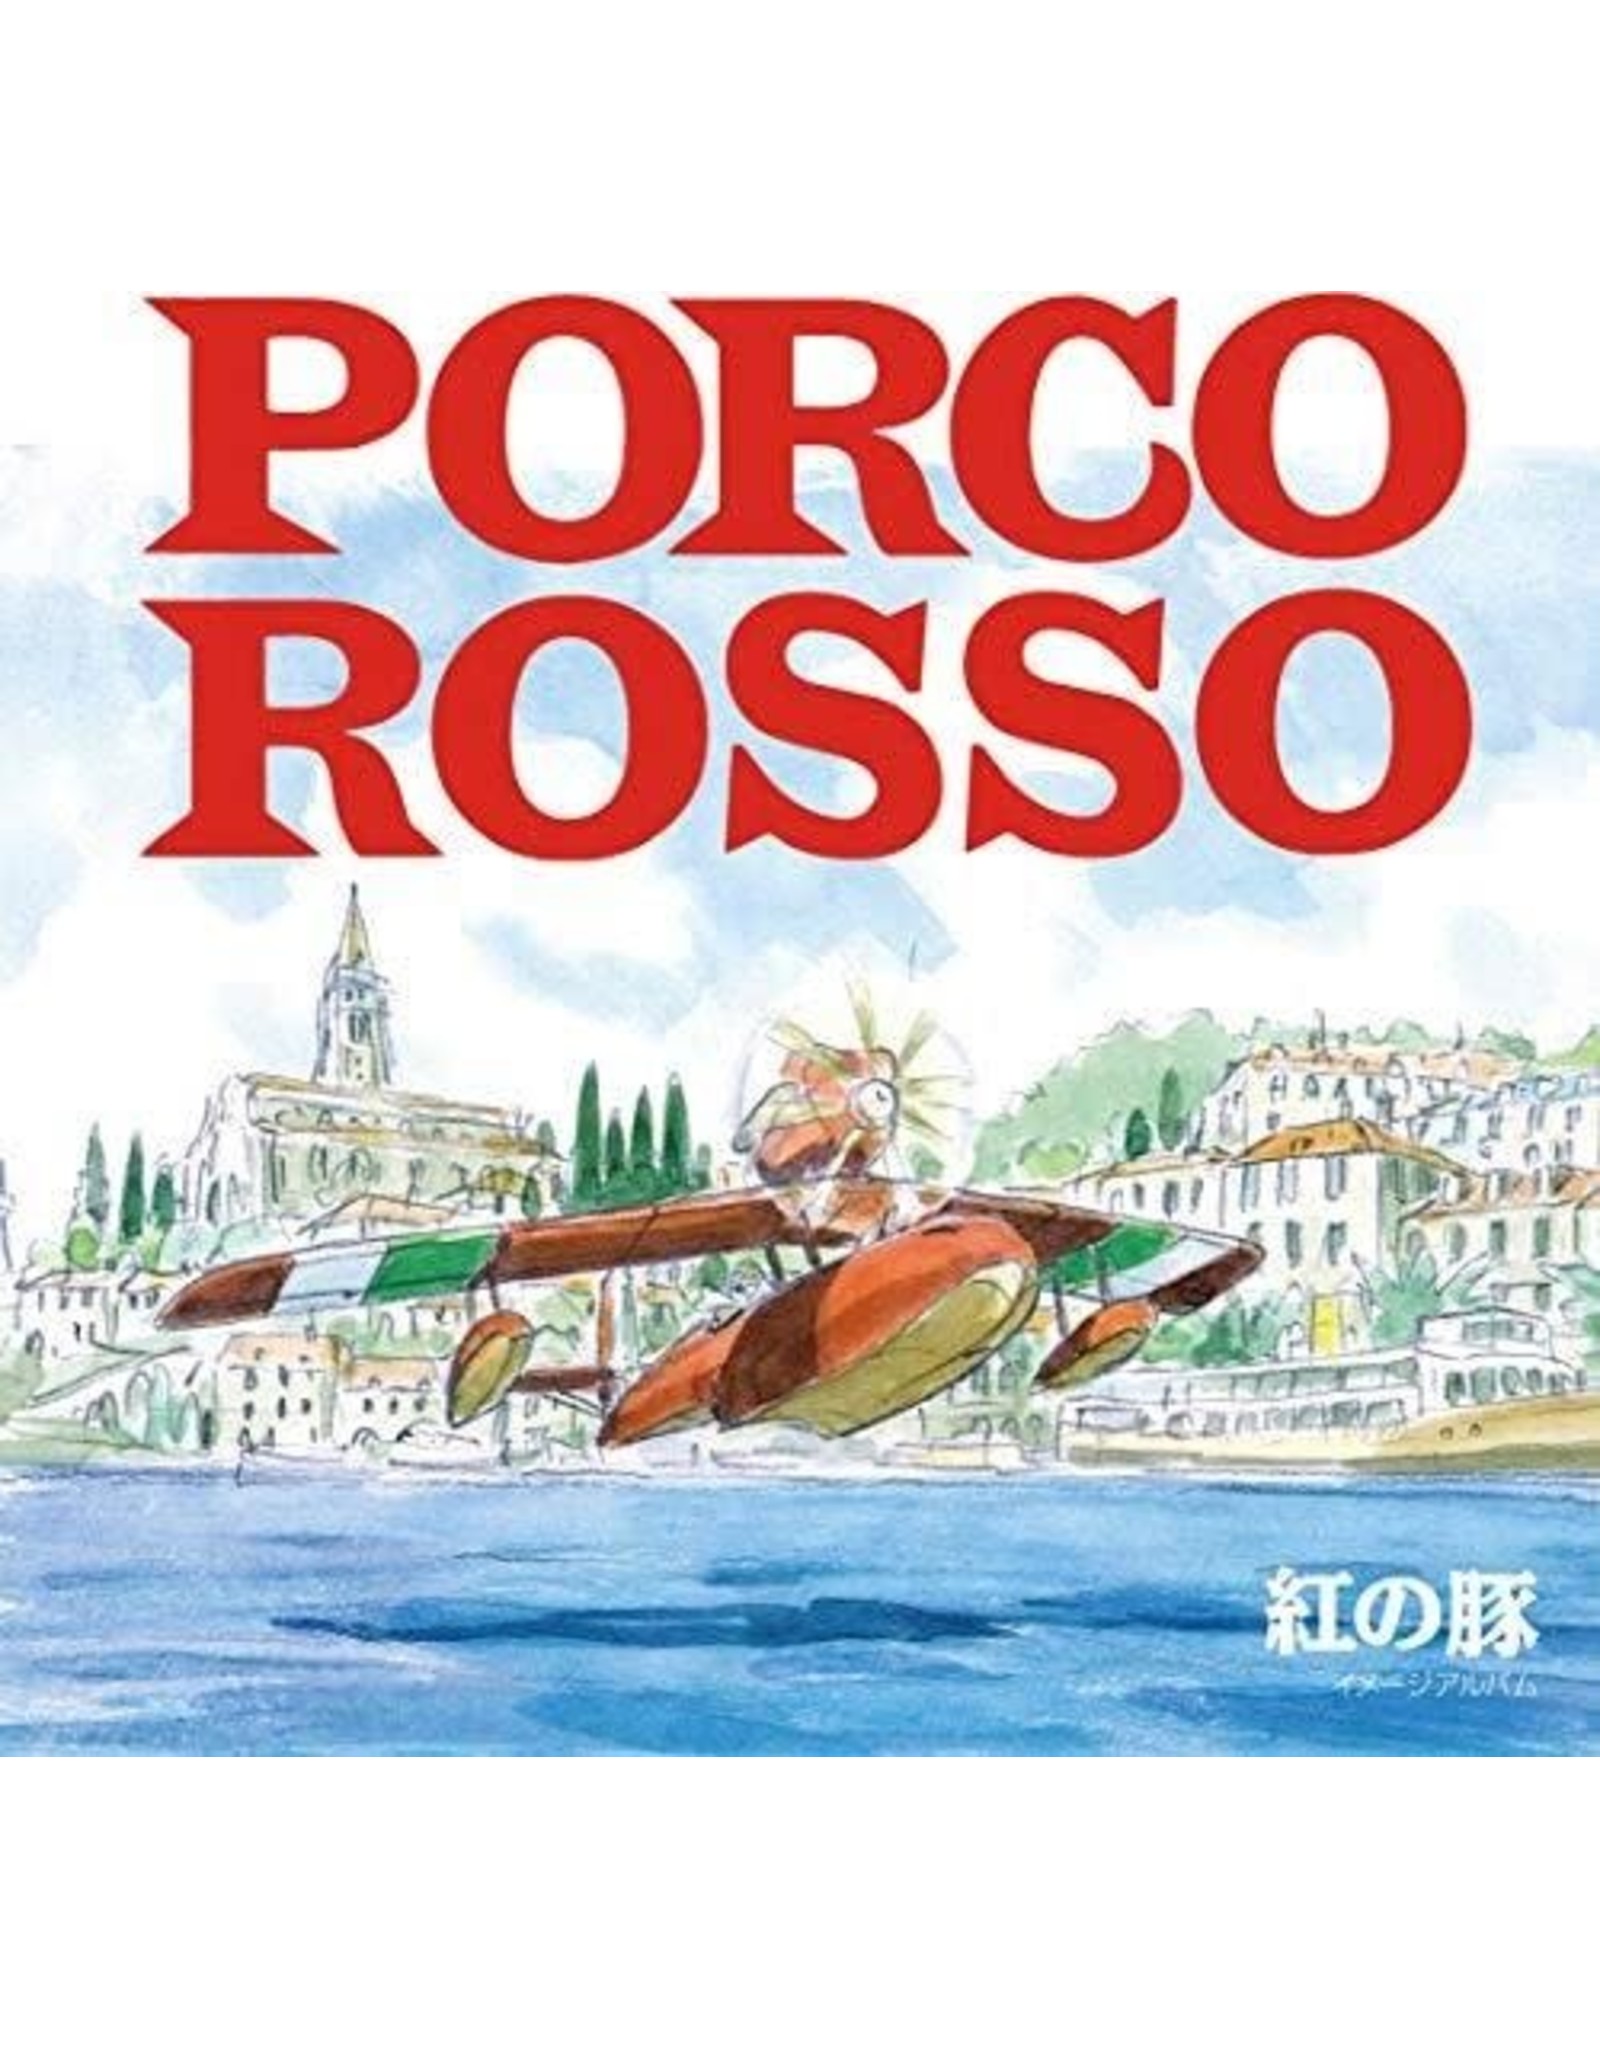 New Vinyl Joe Hisaishi - Porco Rosso OST (Limited Edition) LP